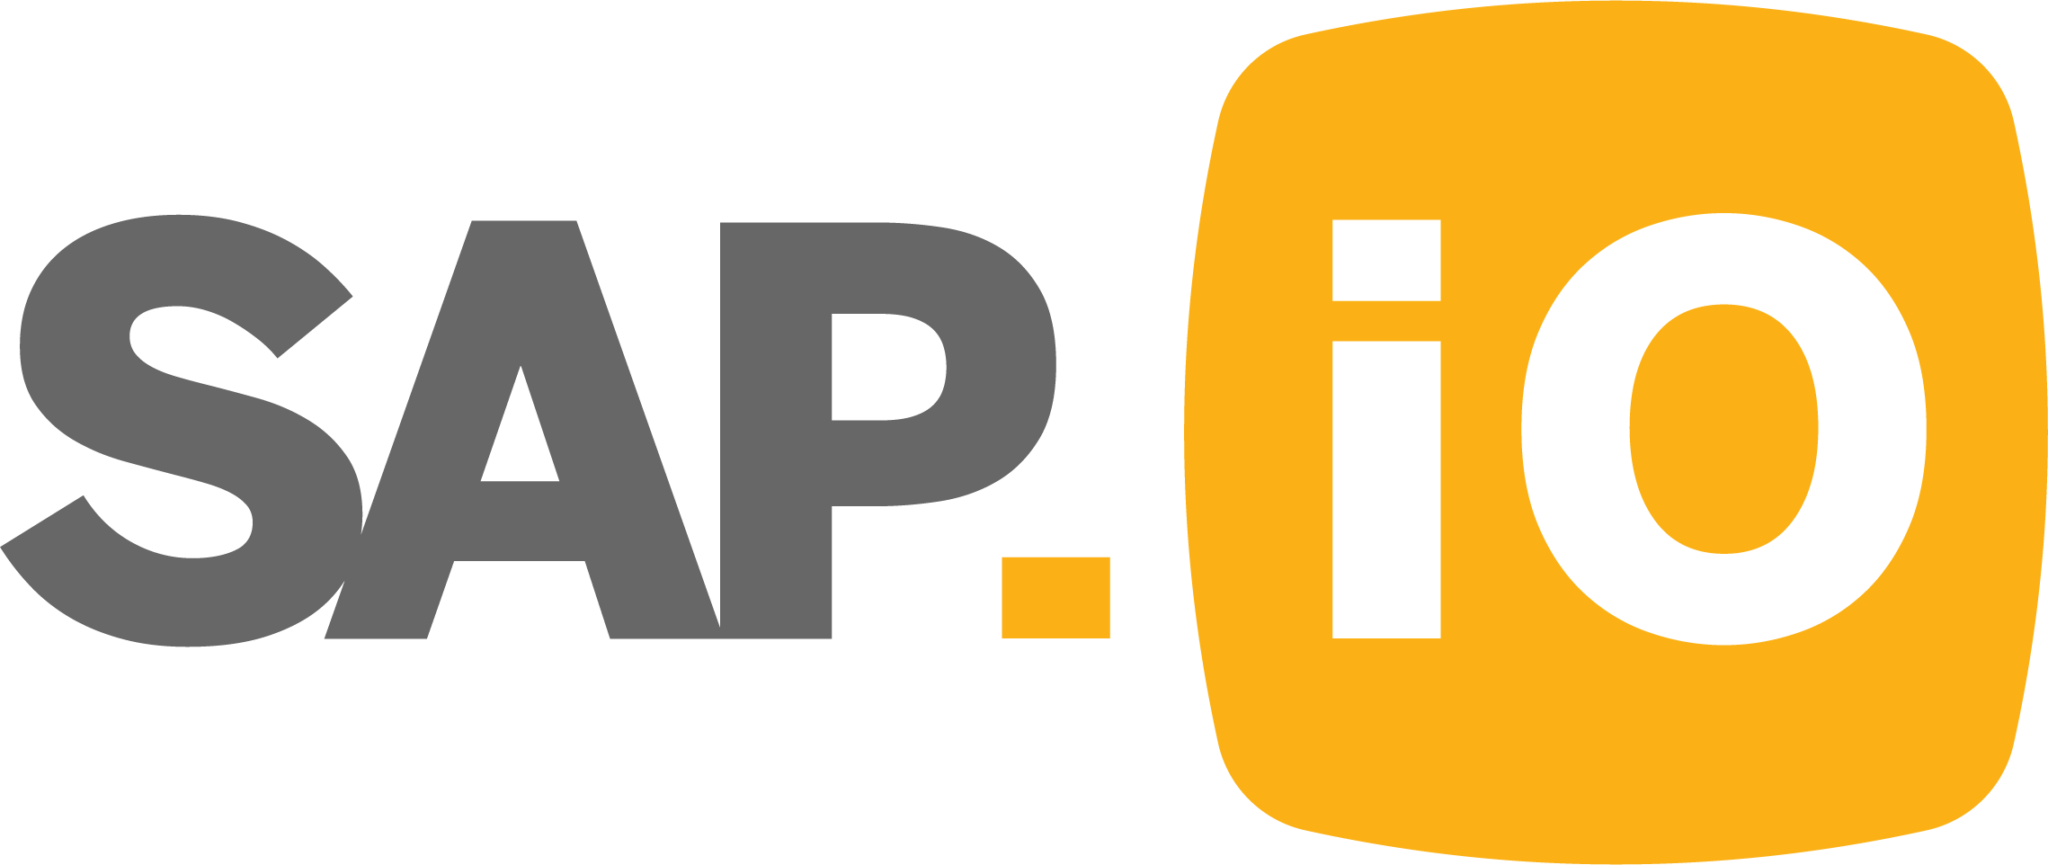 SAP desktop partner logo